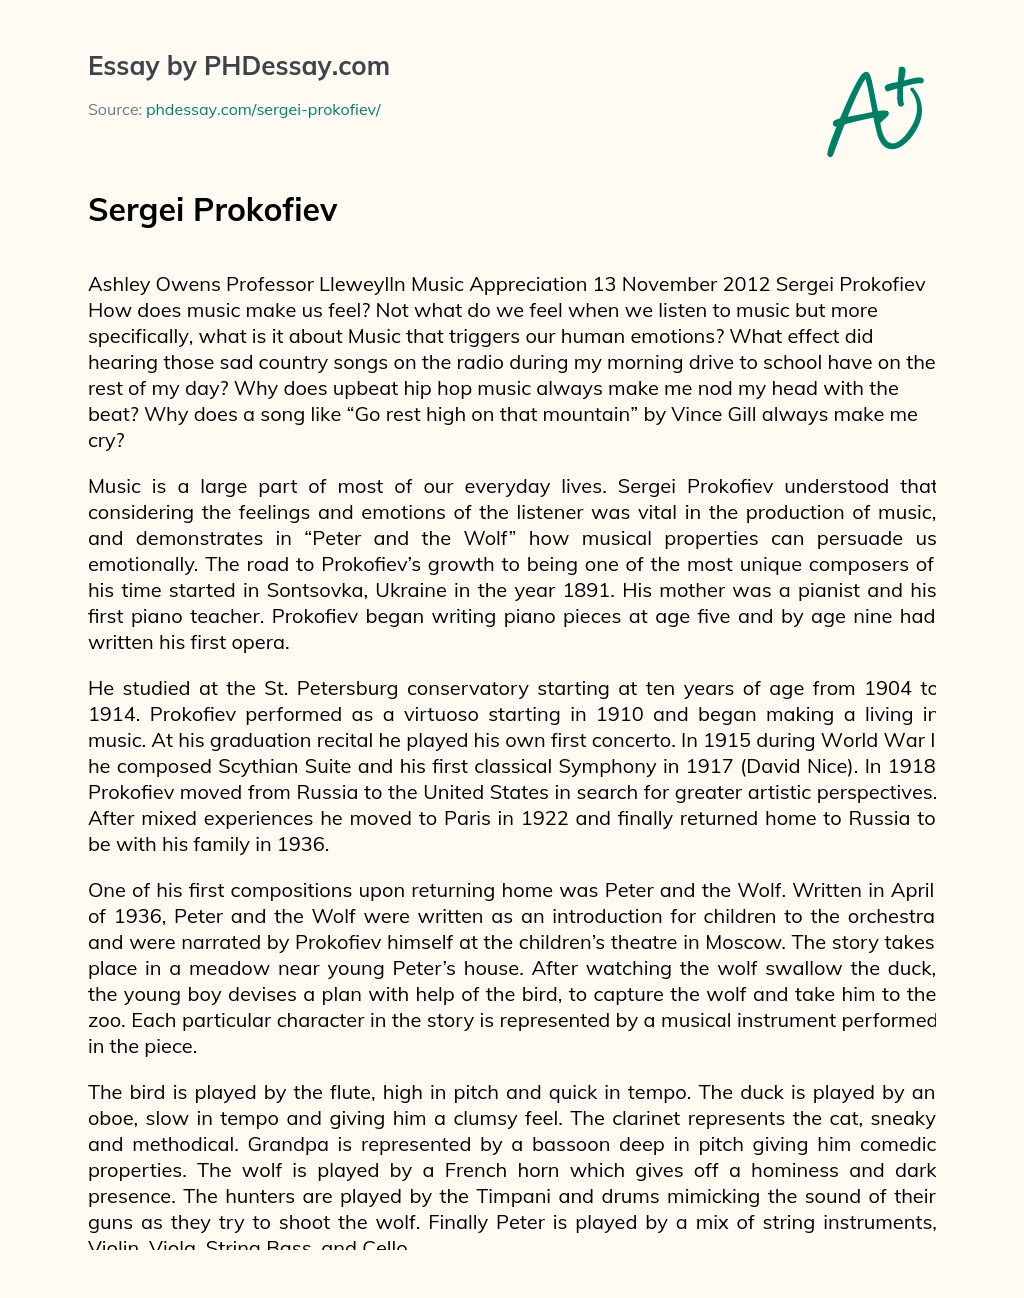 Sergei Prokofiev essay